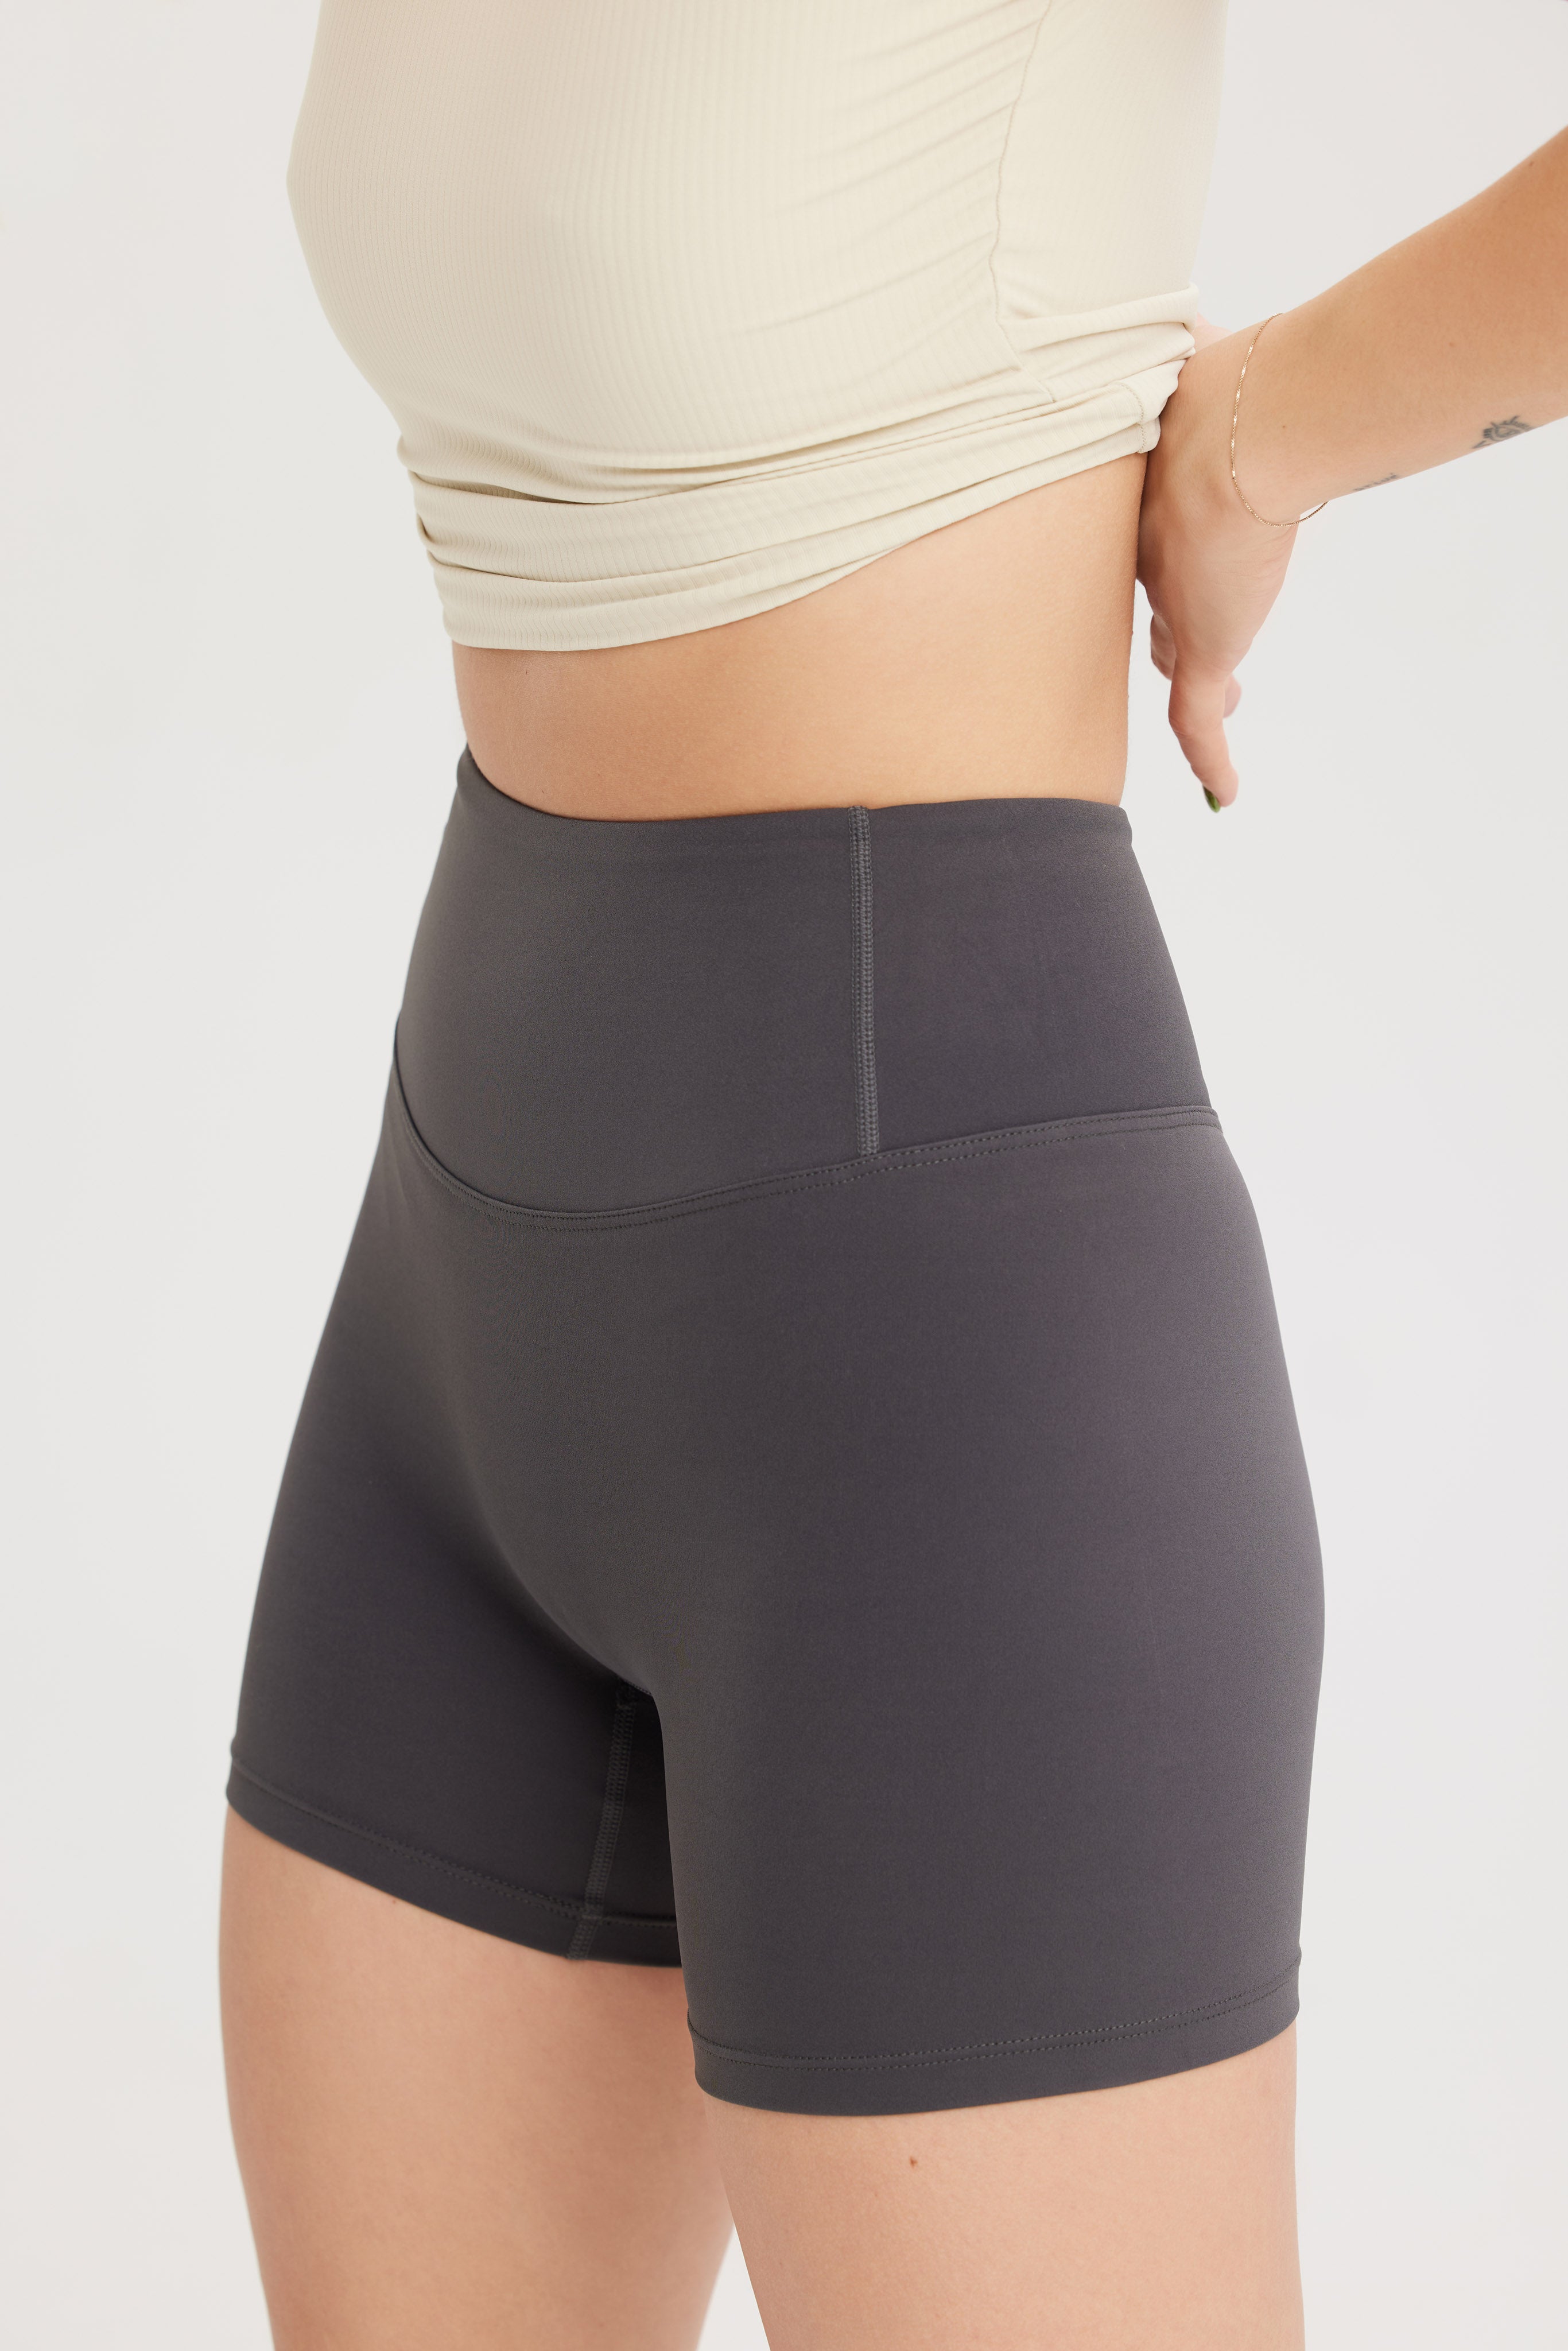 EKJ Charcoal Grey Seamless High-Waist Butt Lifting Shorts My Store